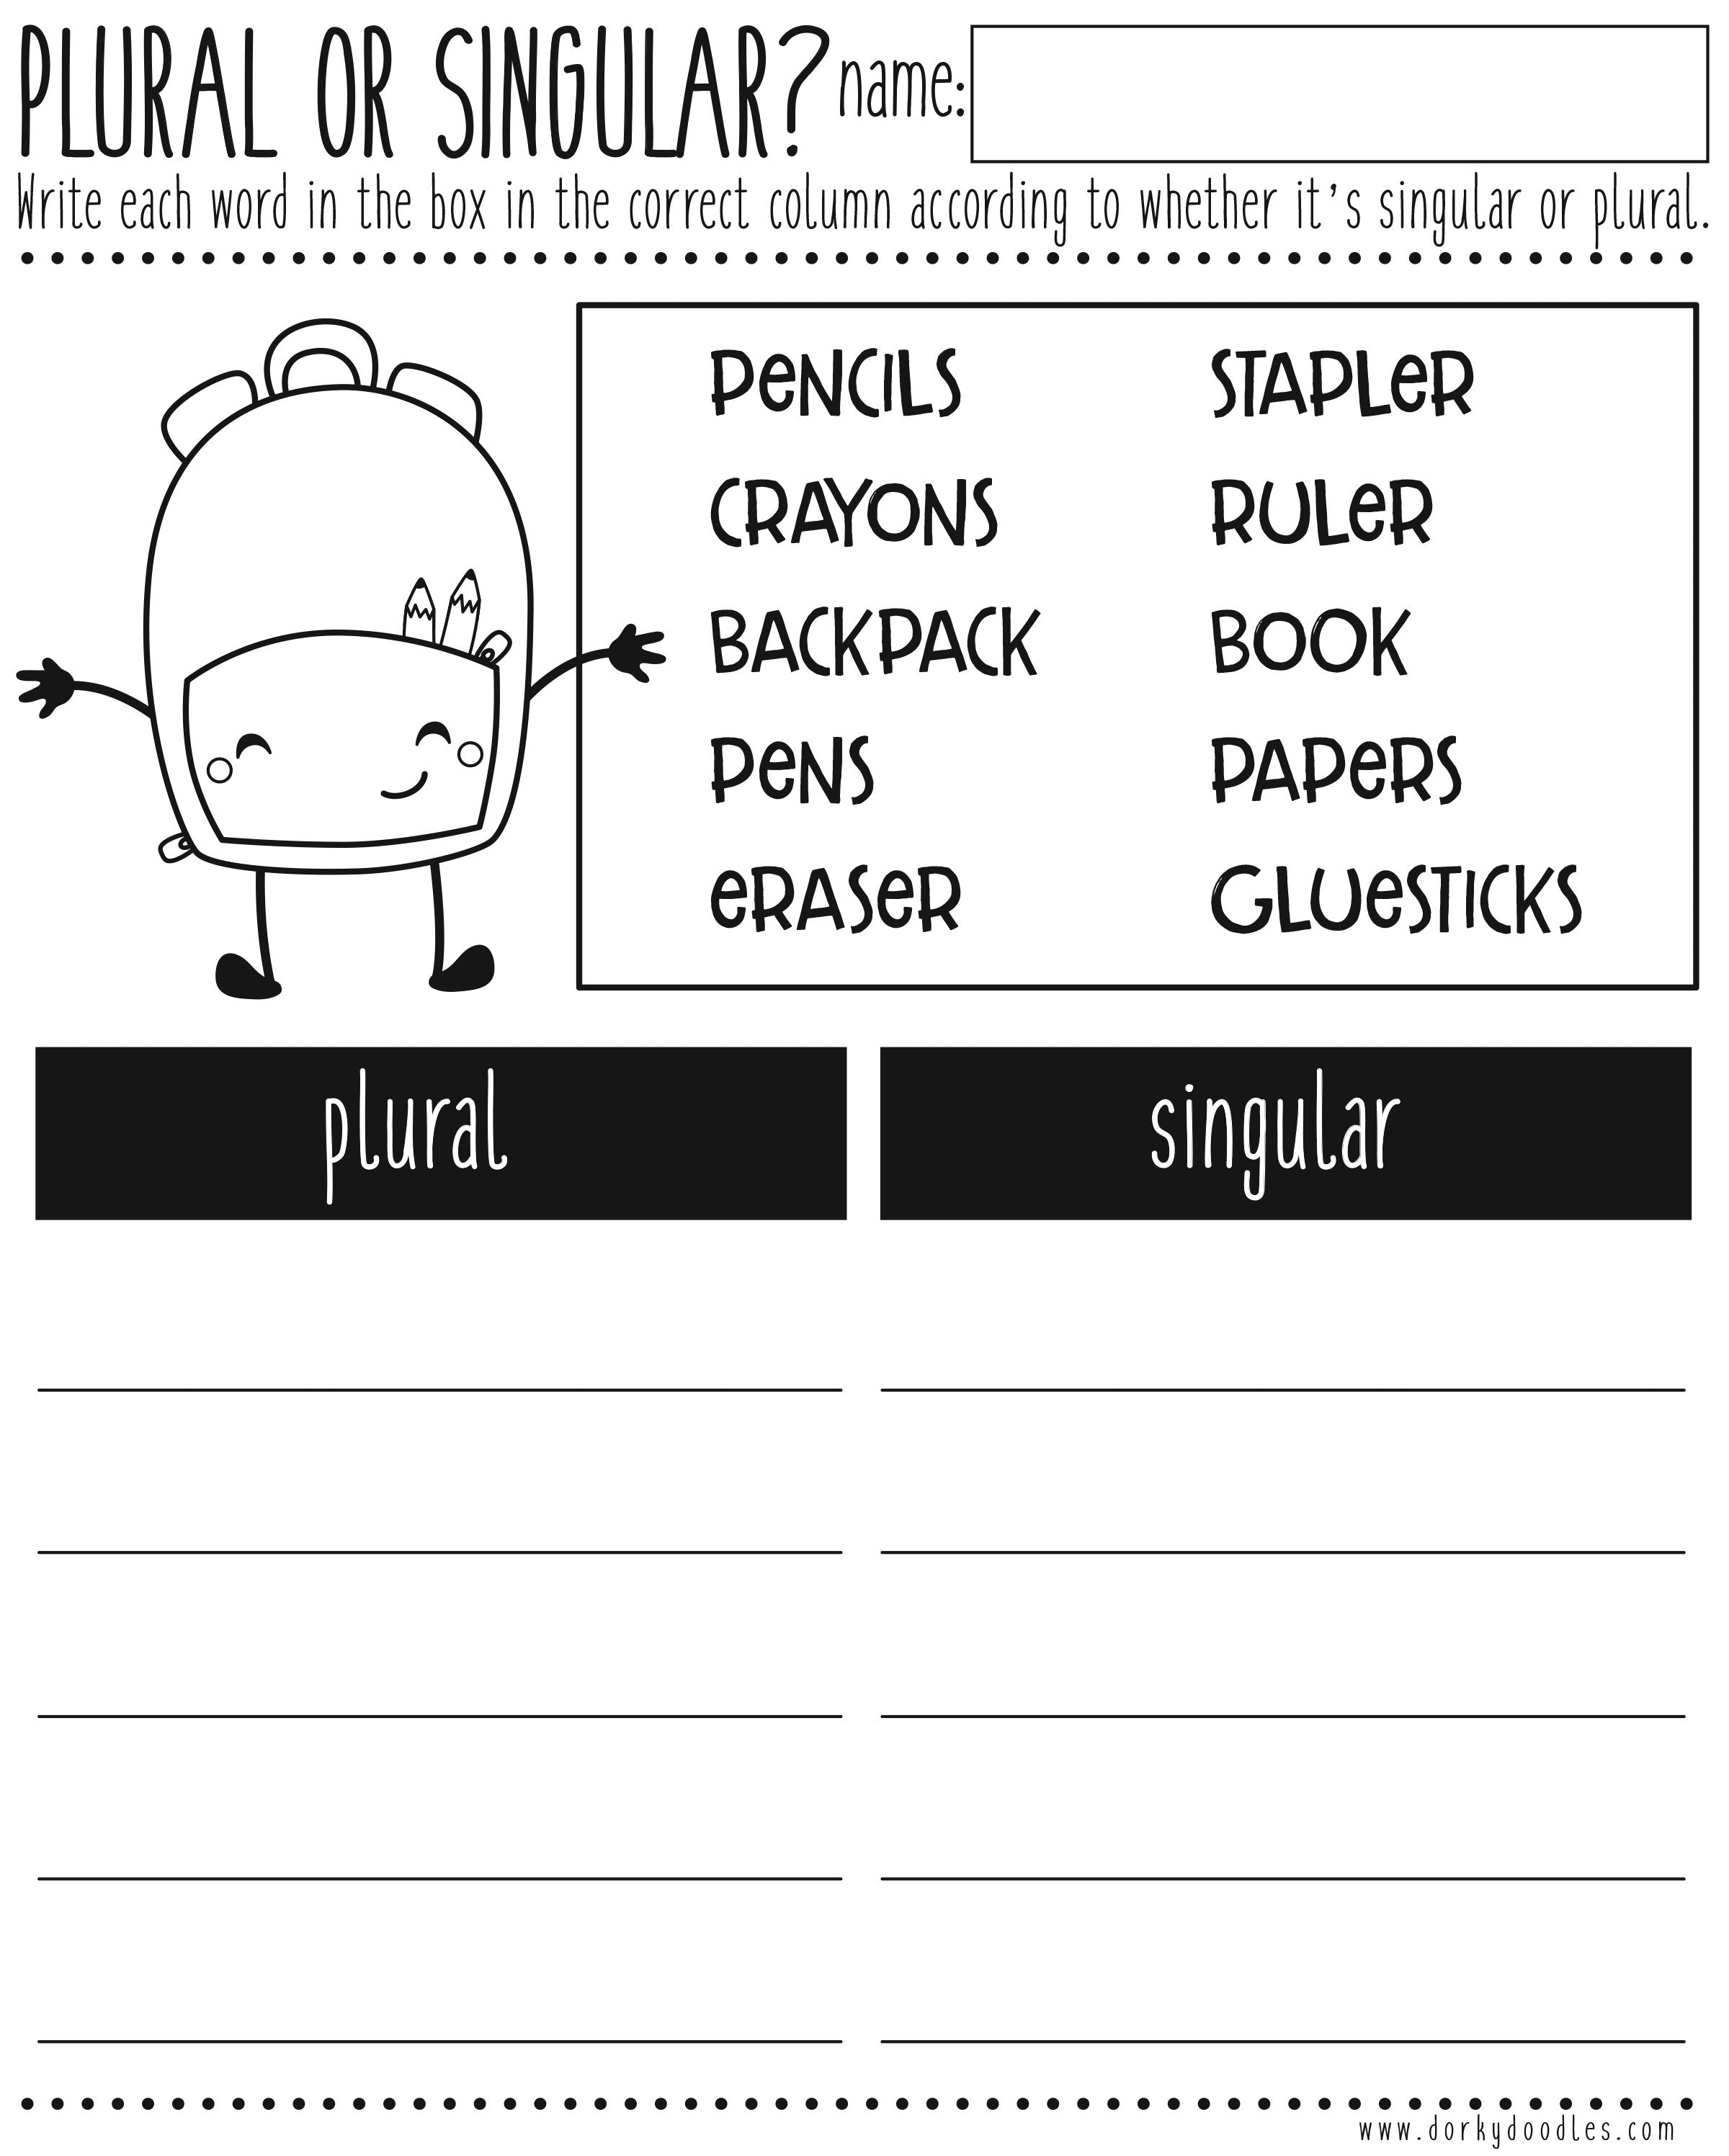 plural-and-singular-nouns-free-printable-dorky-doodles